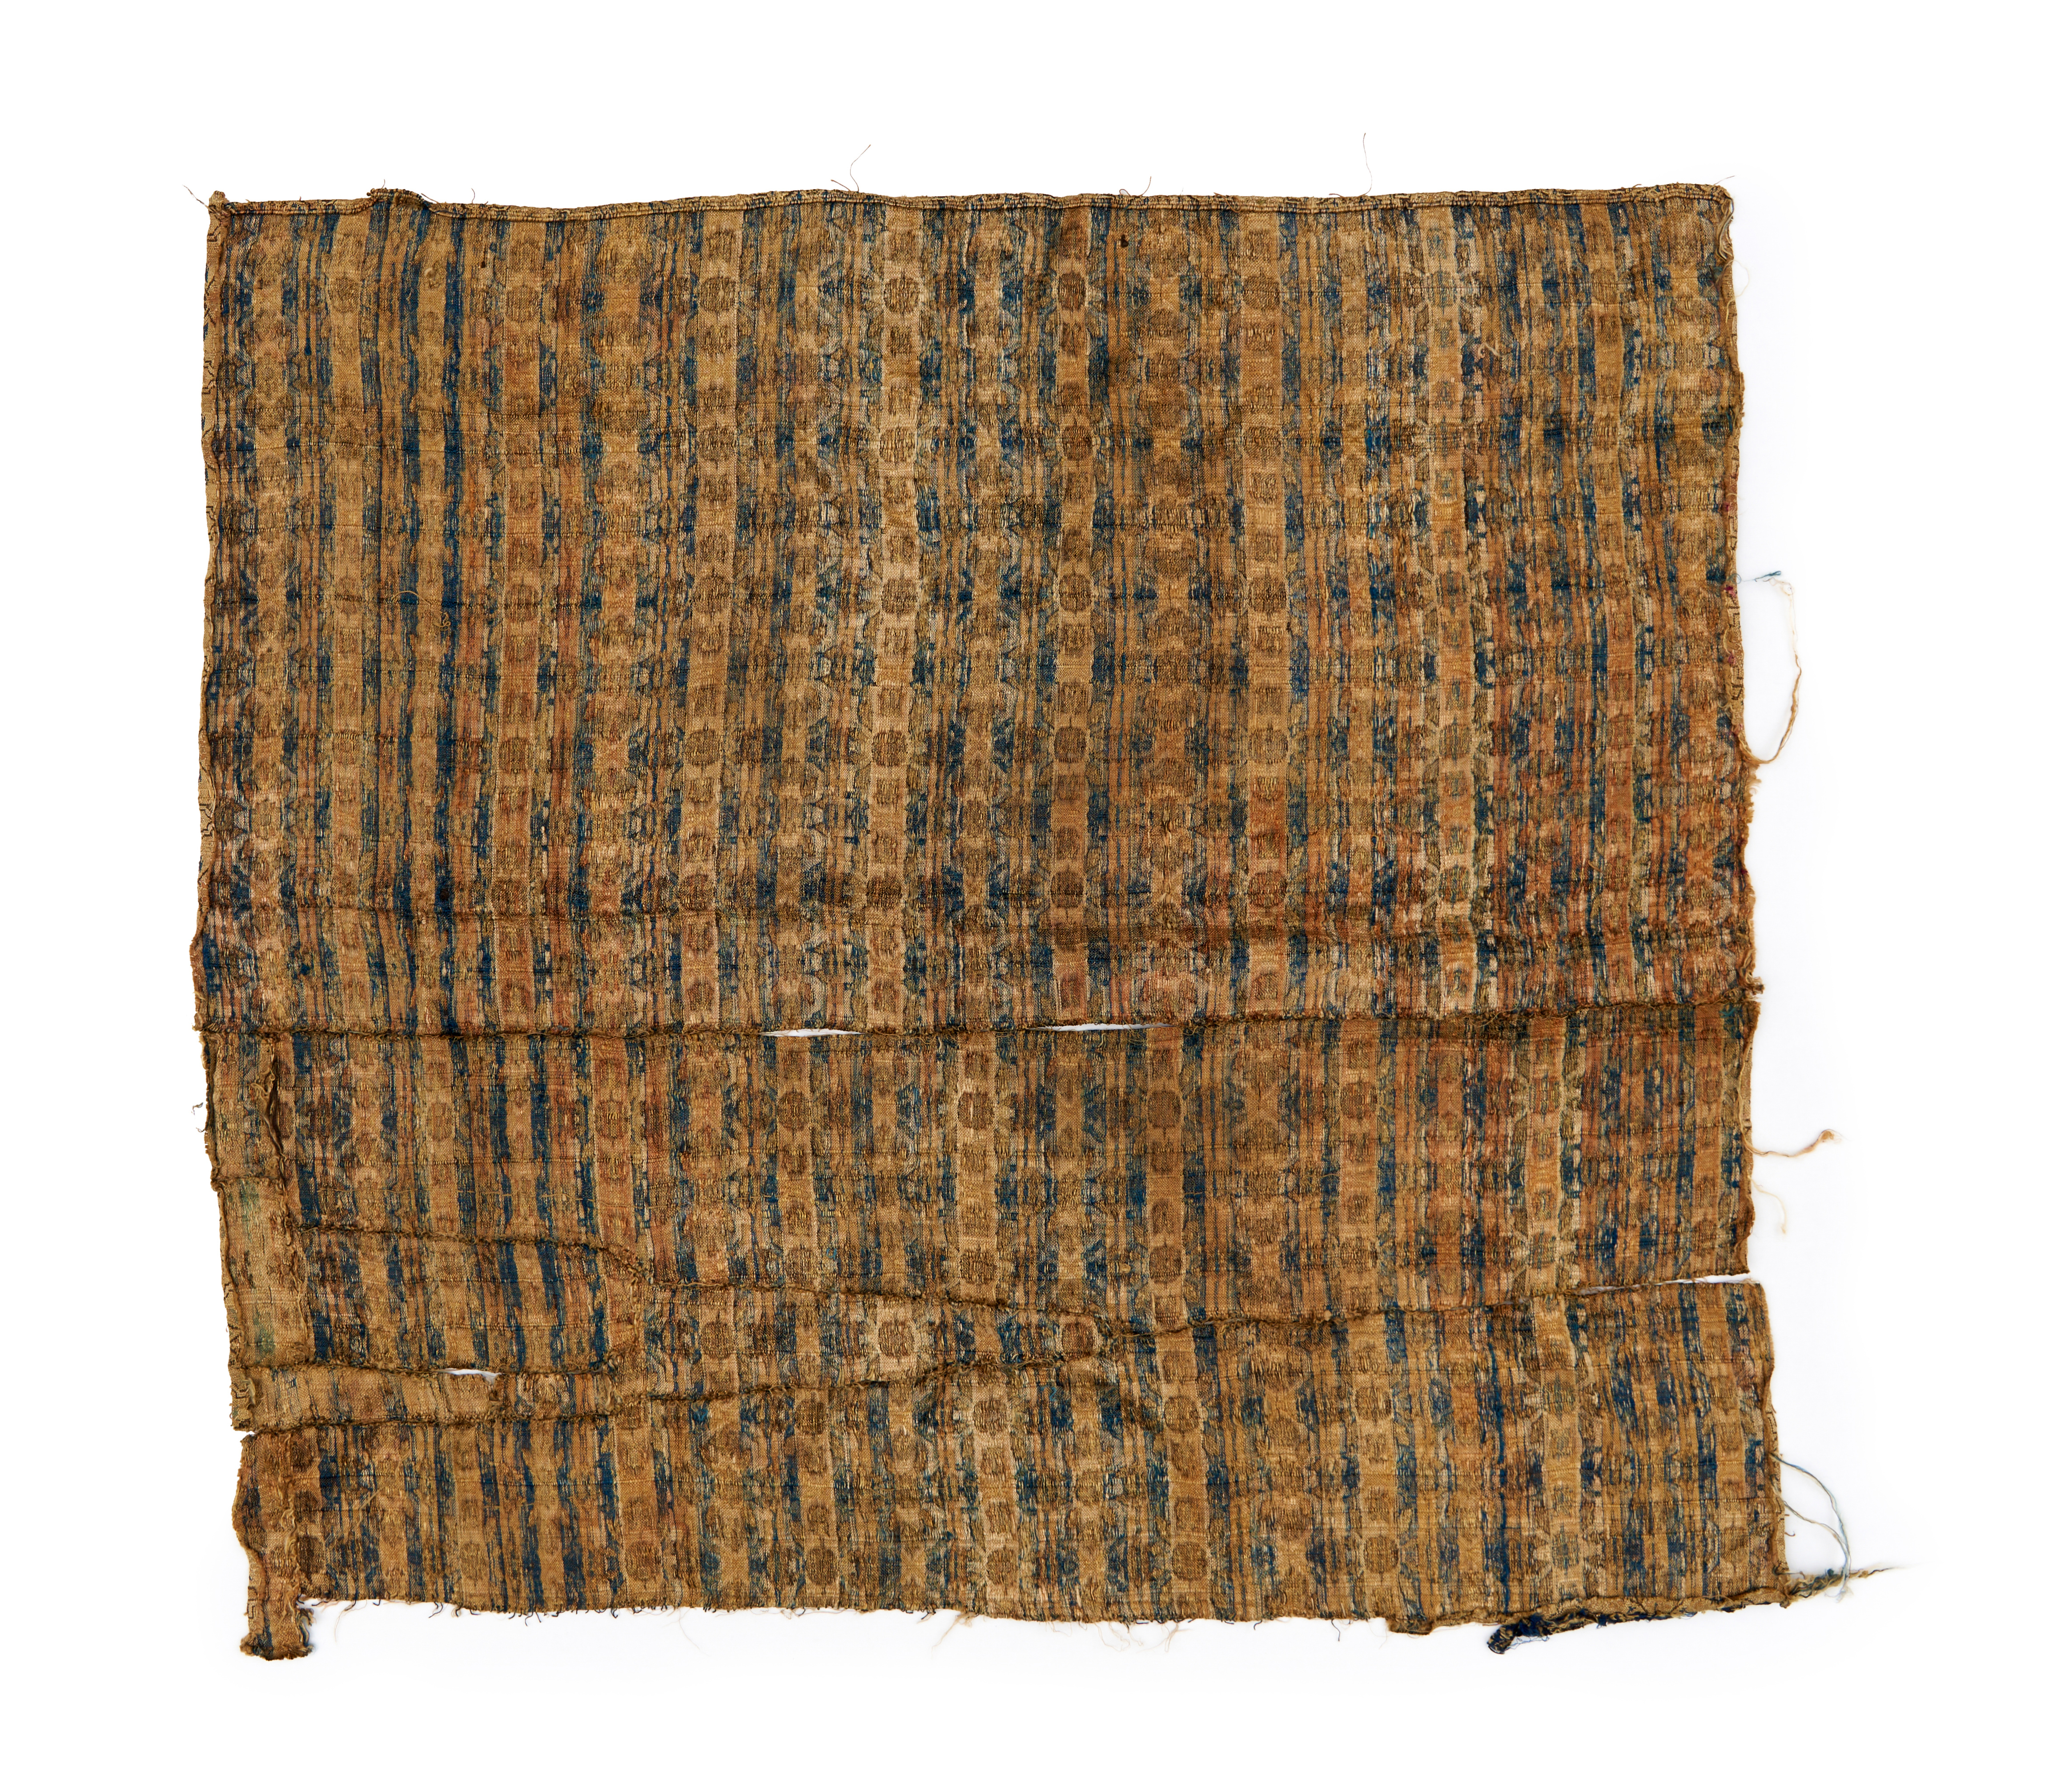 A SAFAVID SILK TEXTILE PANEL, 17TH CENTURY, PERSIA - Image 3 of 4